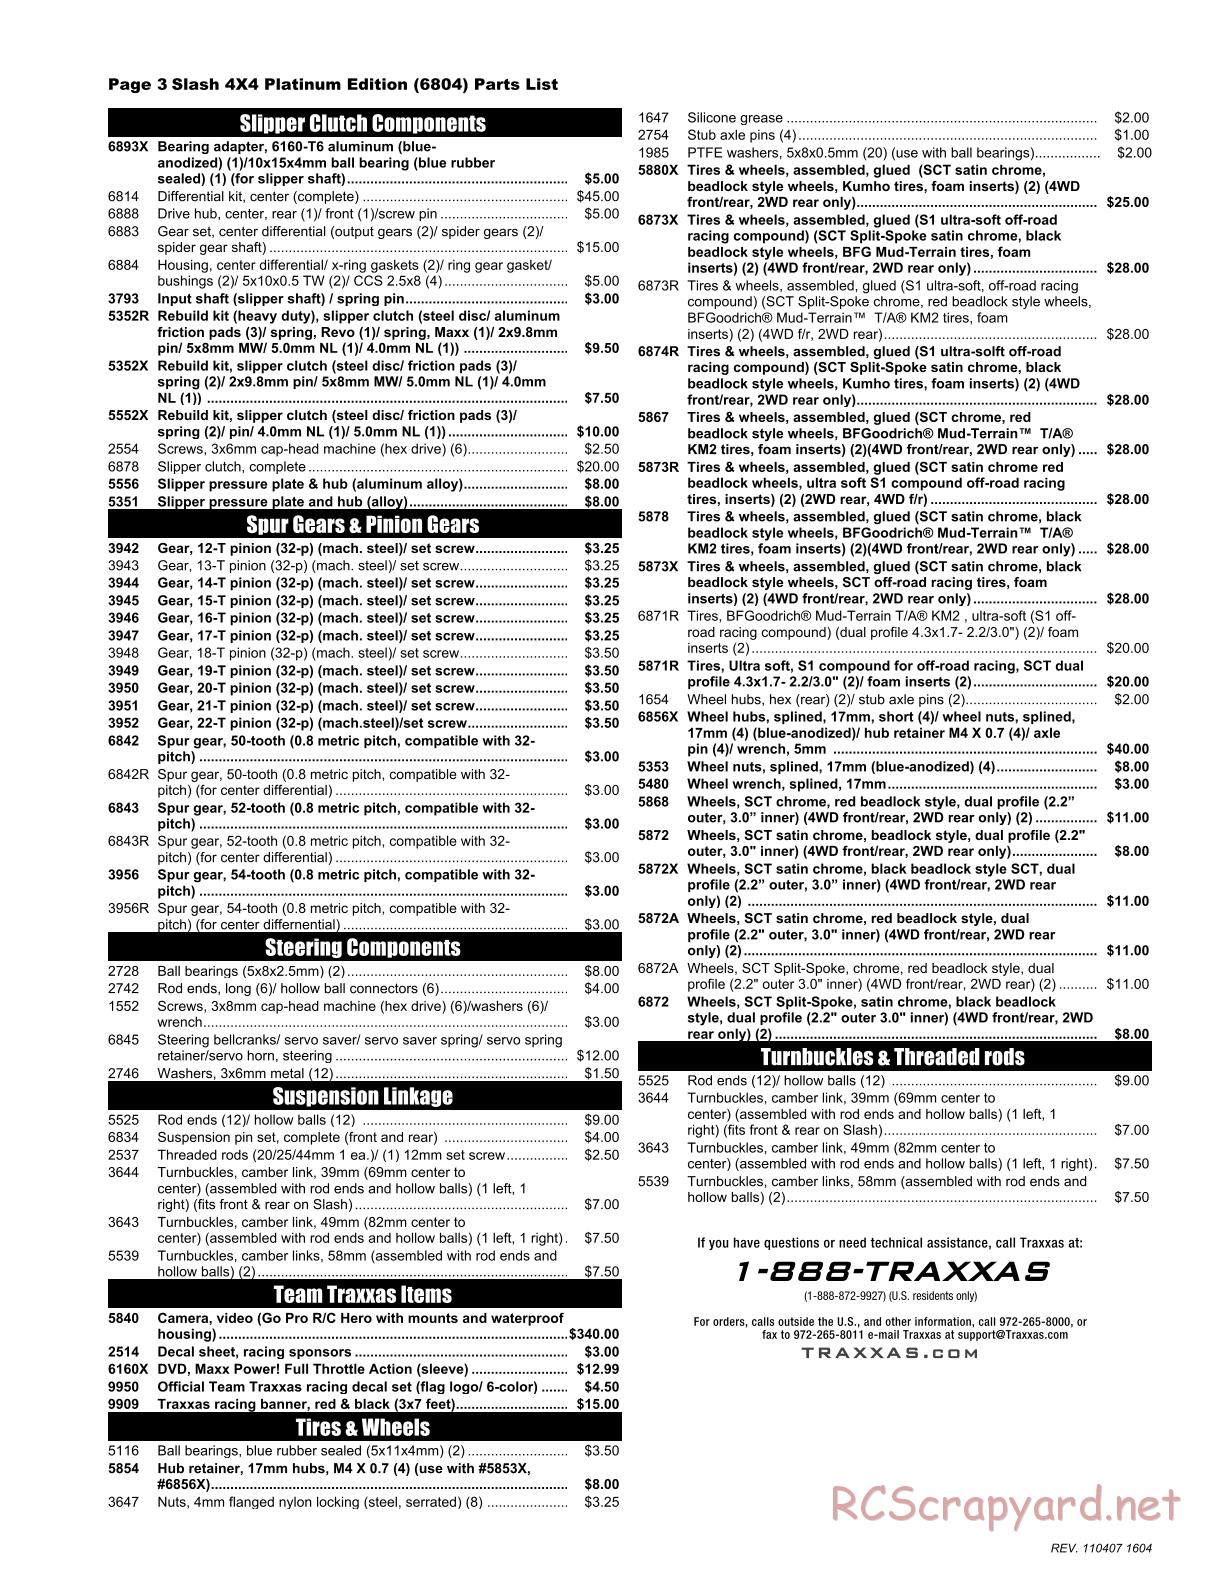 Traxxas - Slash 4x4 Platinum Ed (2010) - Parts List - Page 3